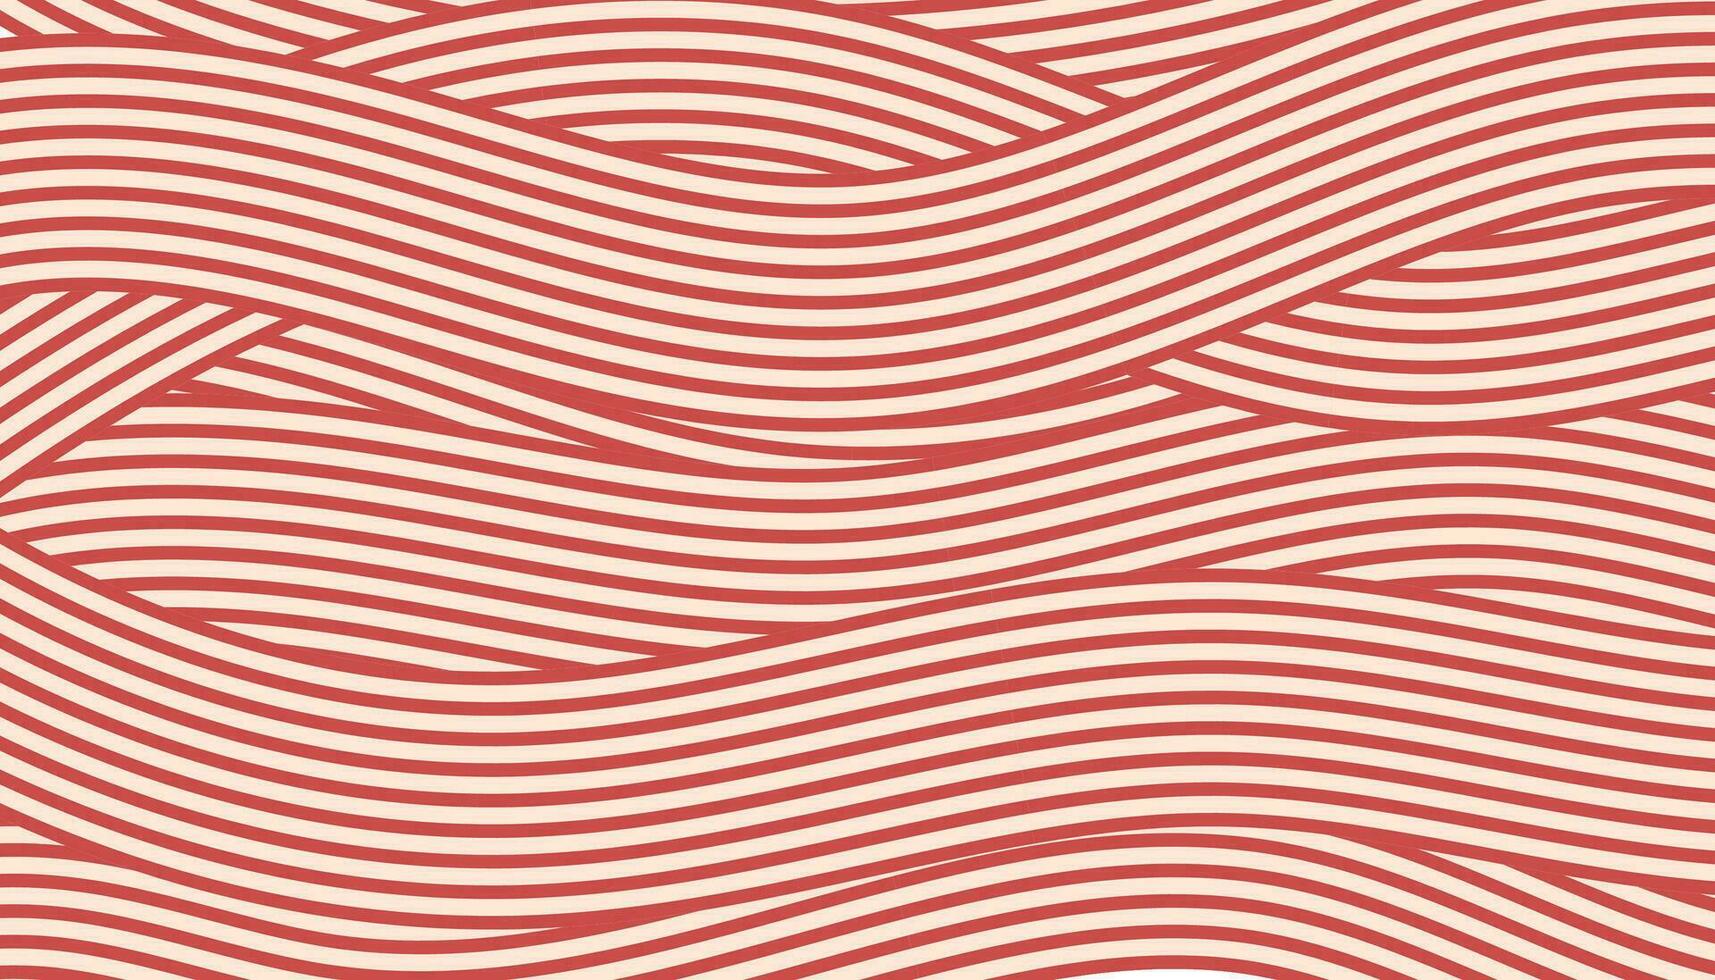 Red pasta spaghetti texture. Wavy geometric line background vector